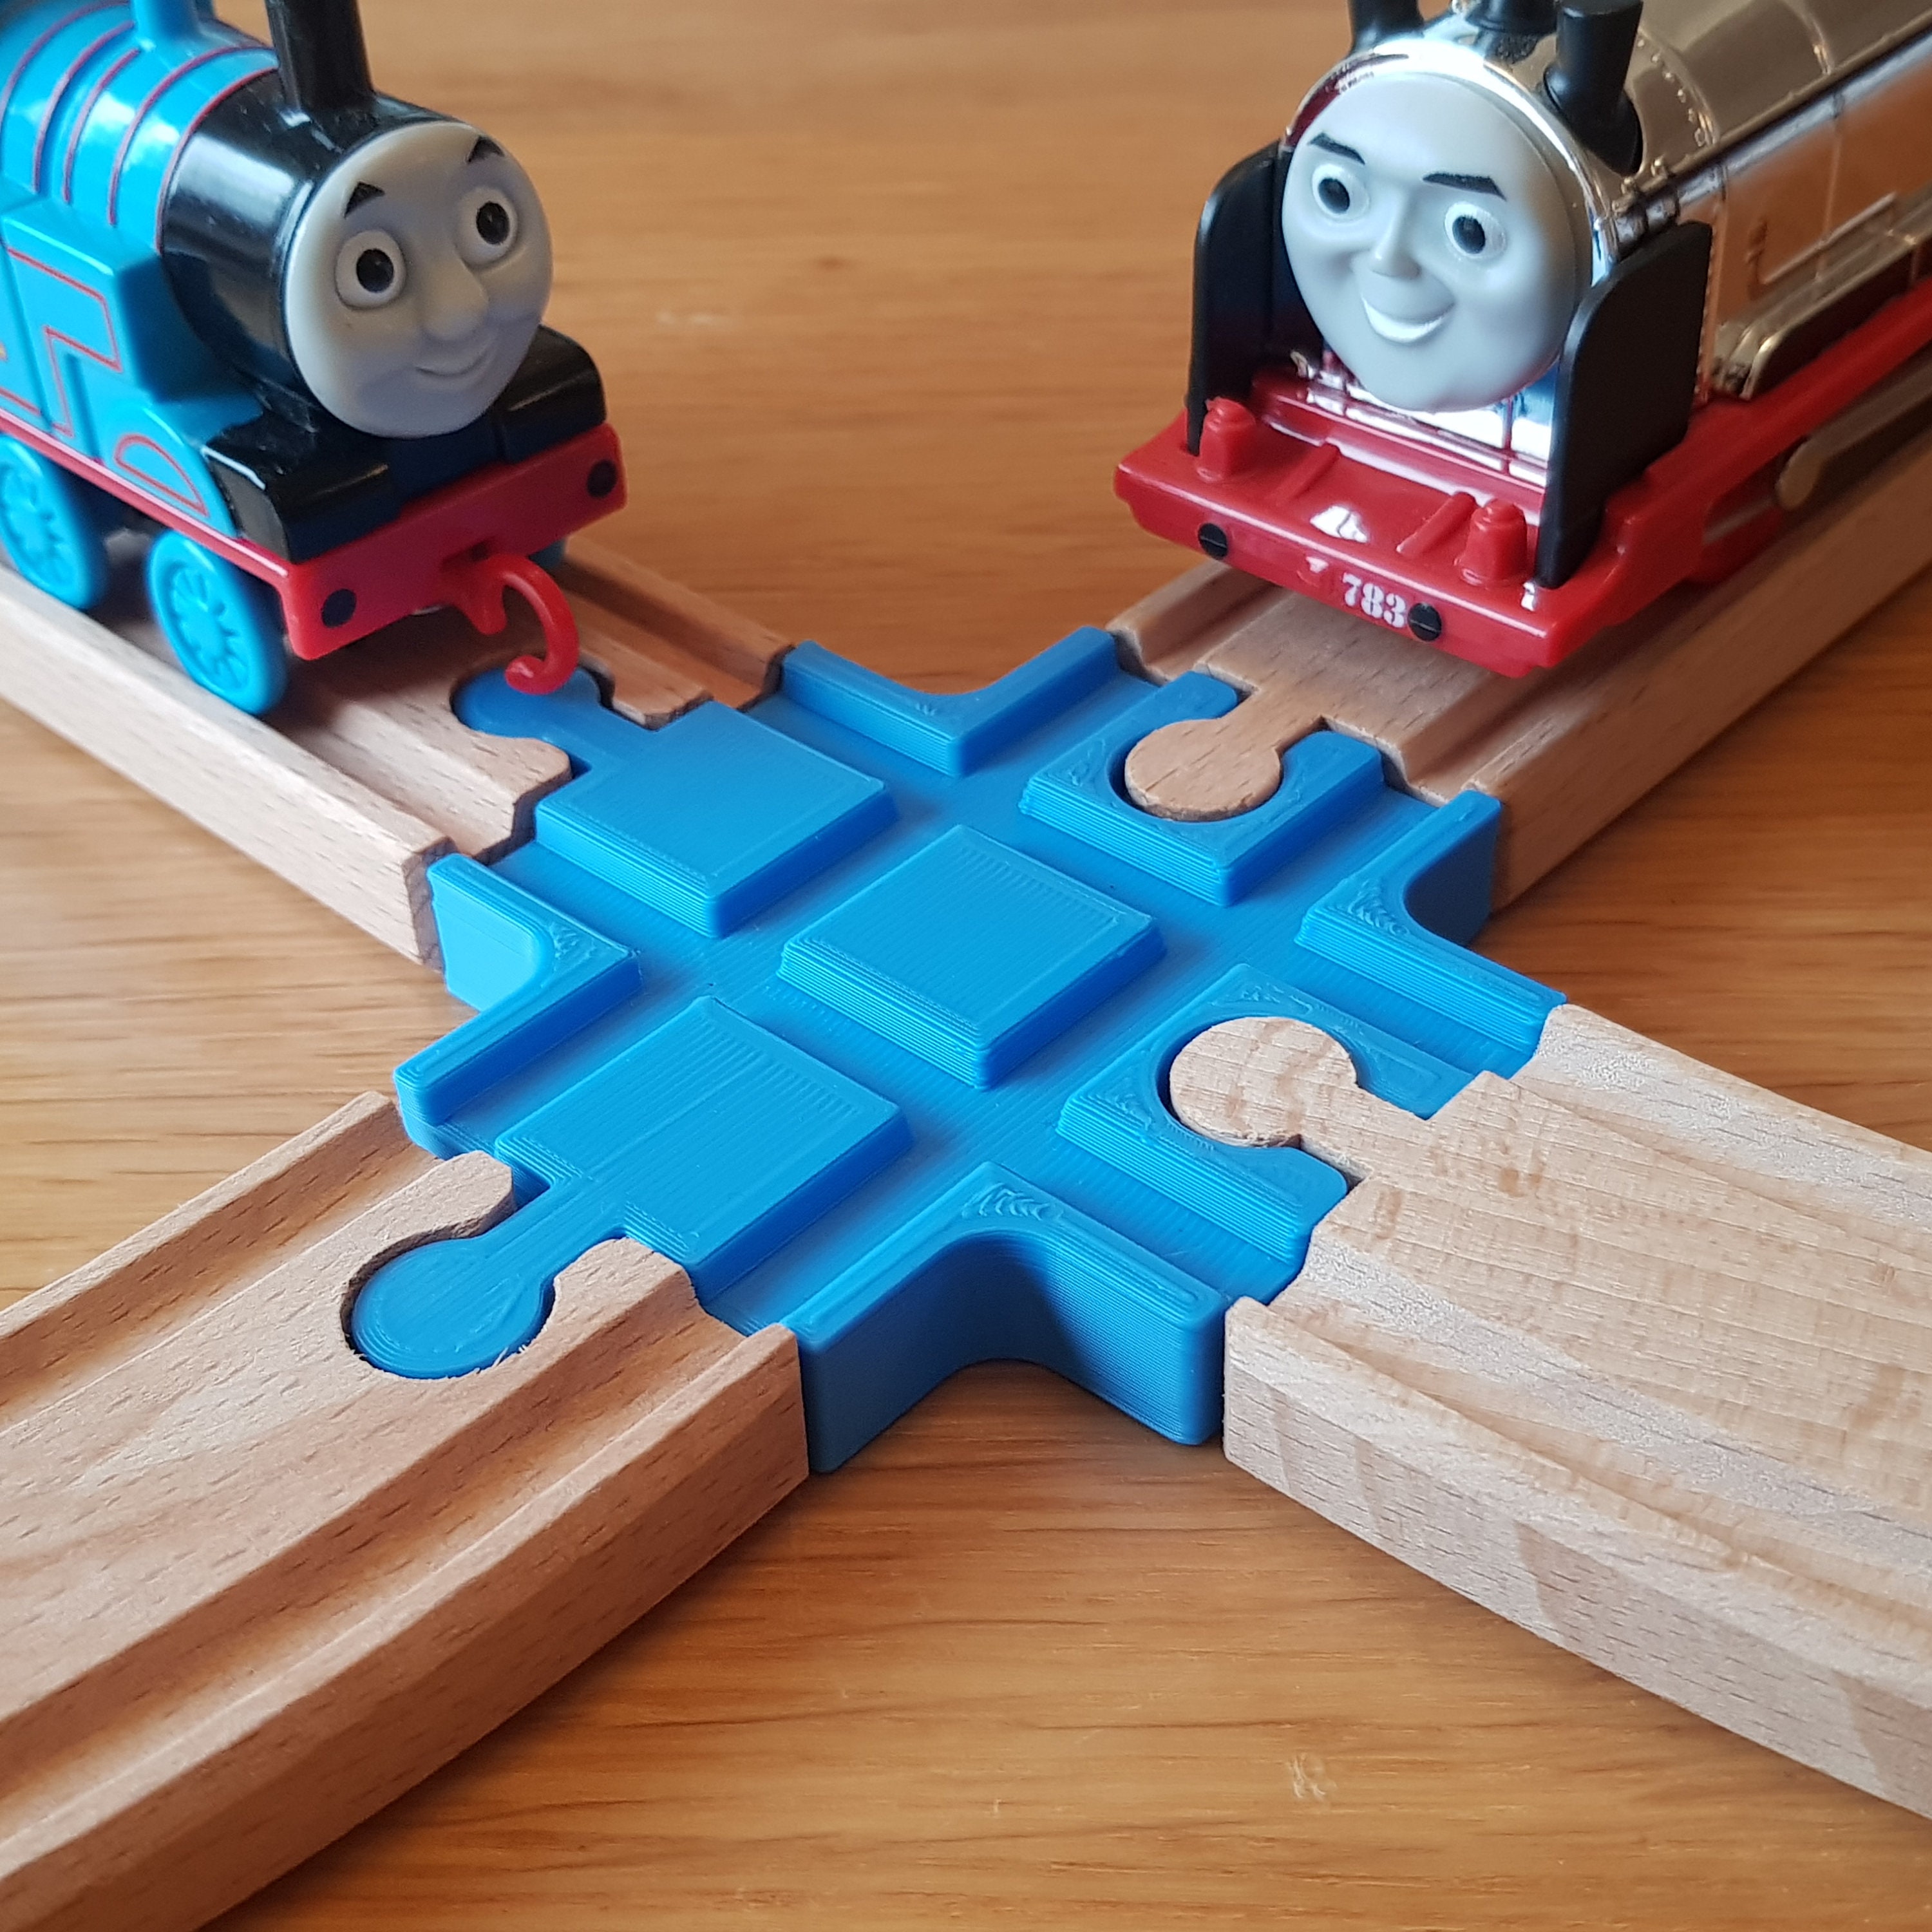 Wooden Train Sets-Brio, Thomas, BigJigs